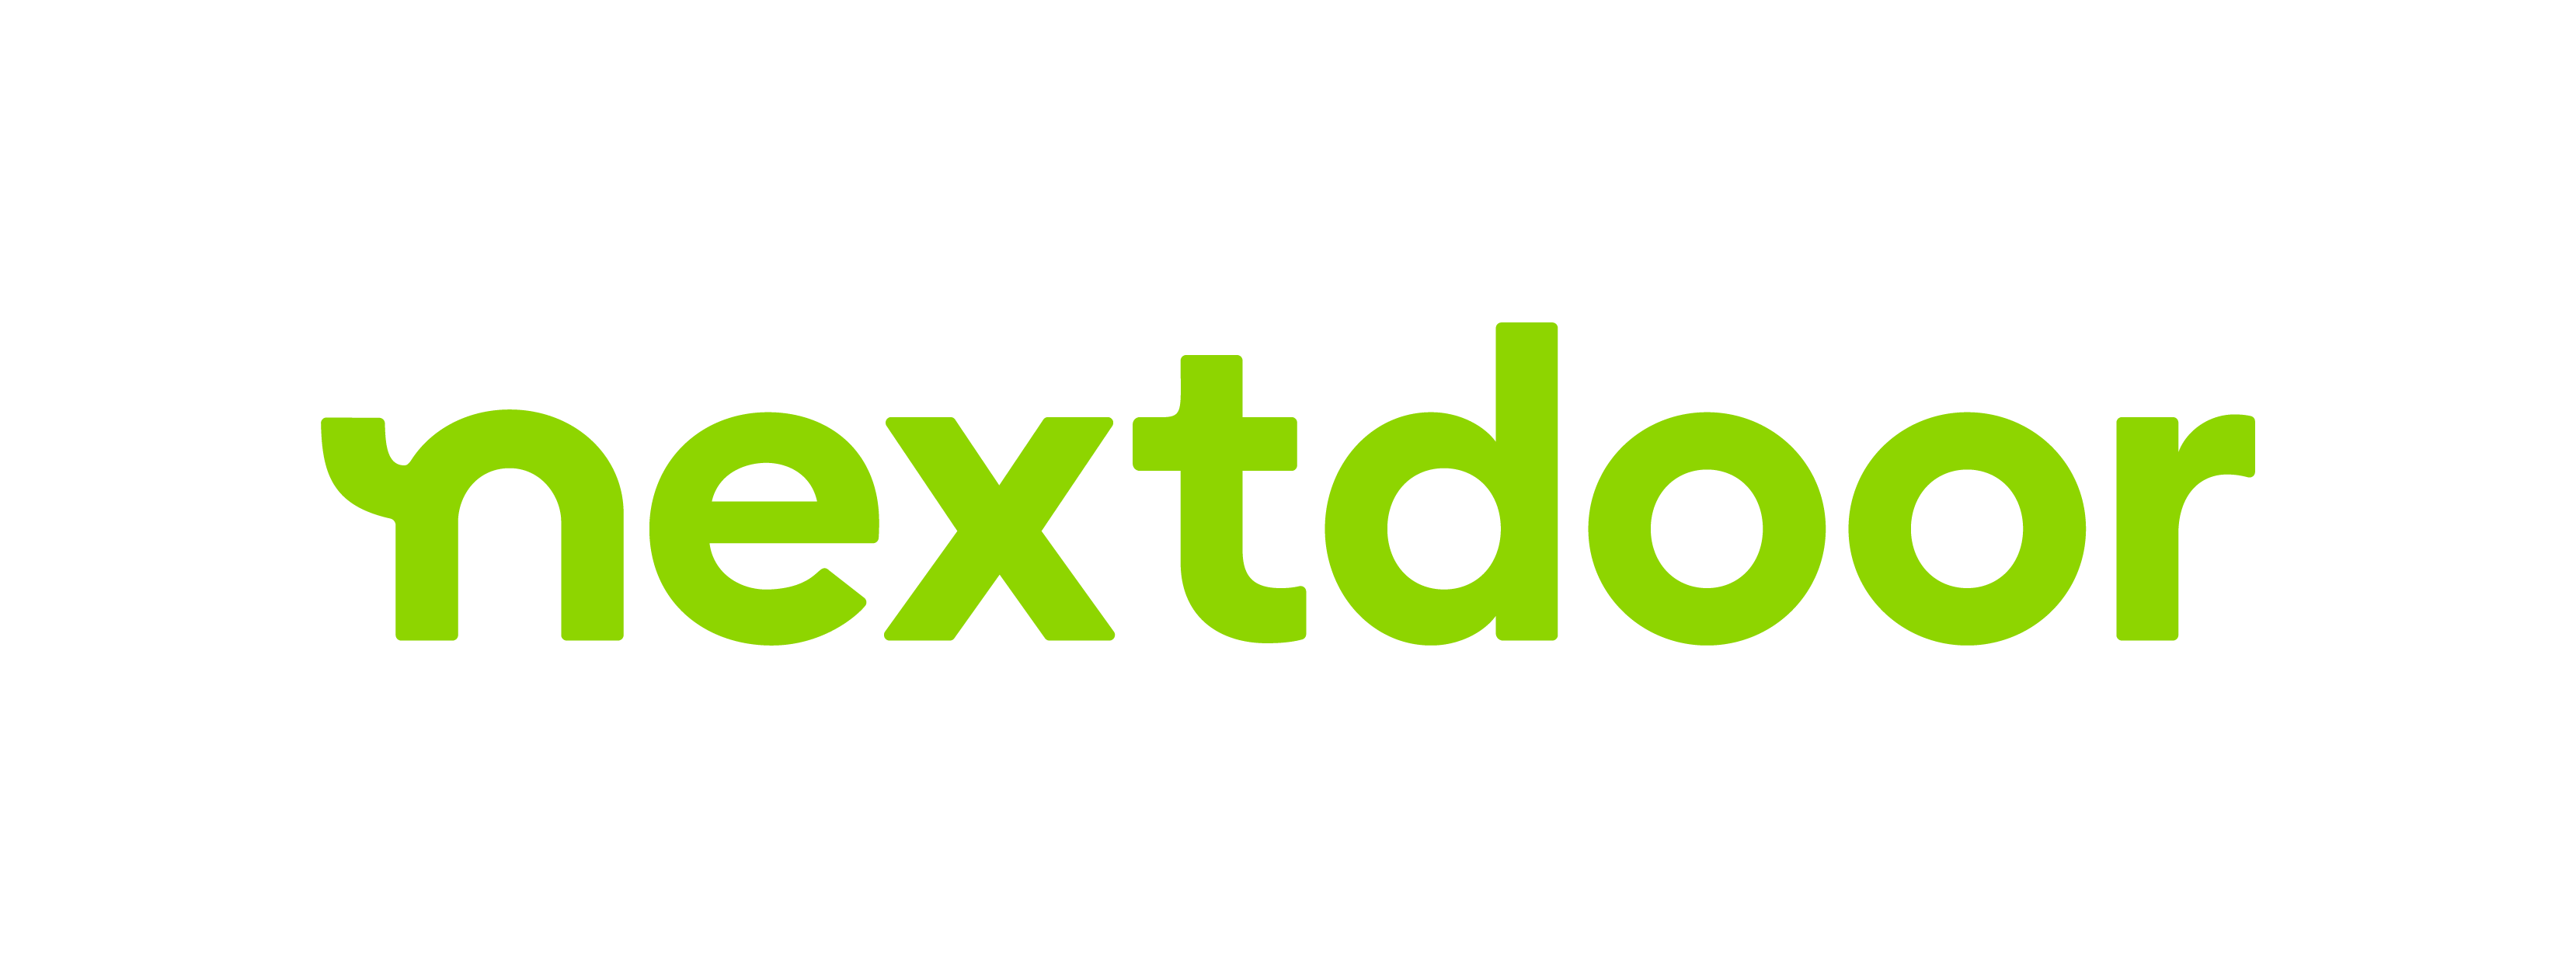 Nextdoor - Wikipedia